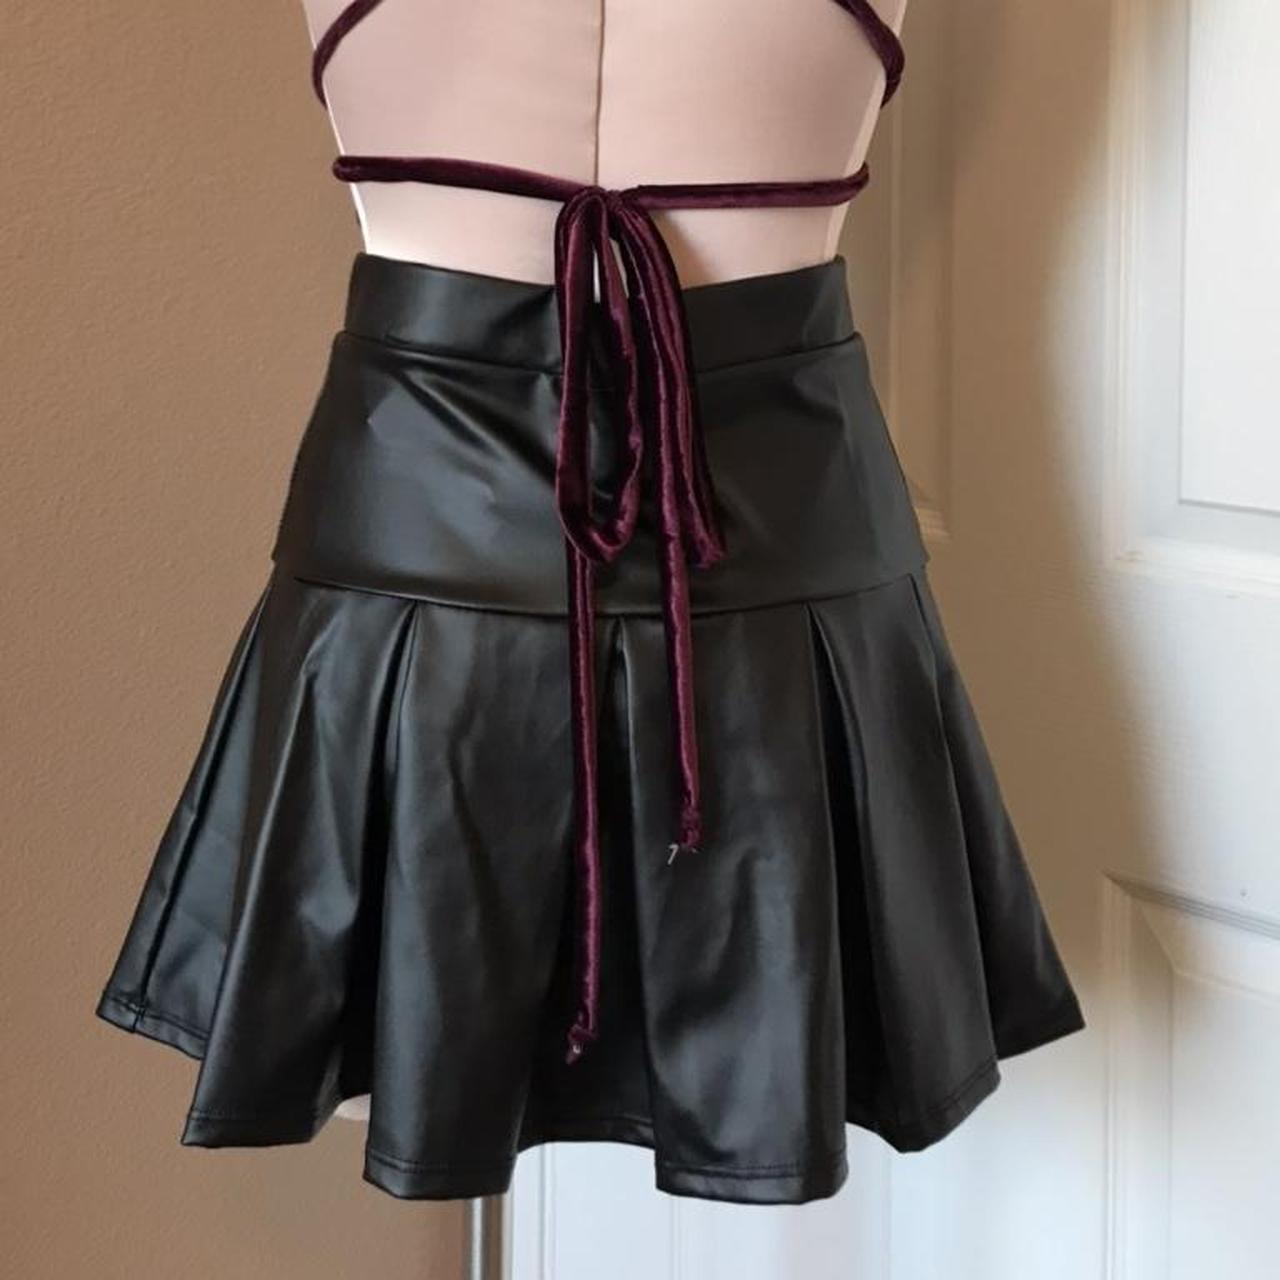 Fashion Nova skirt - Depop